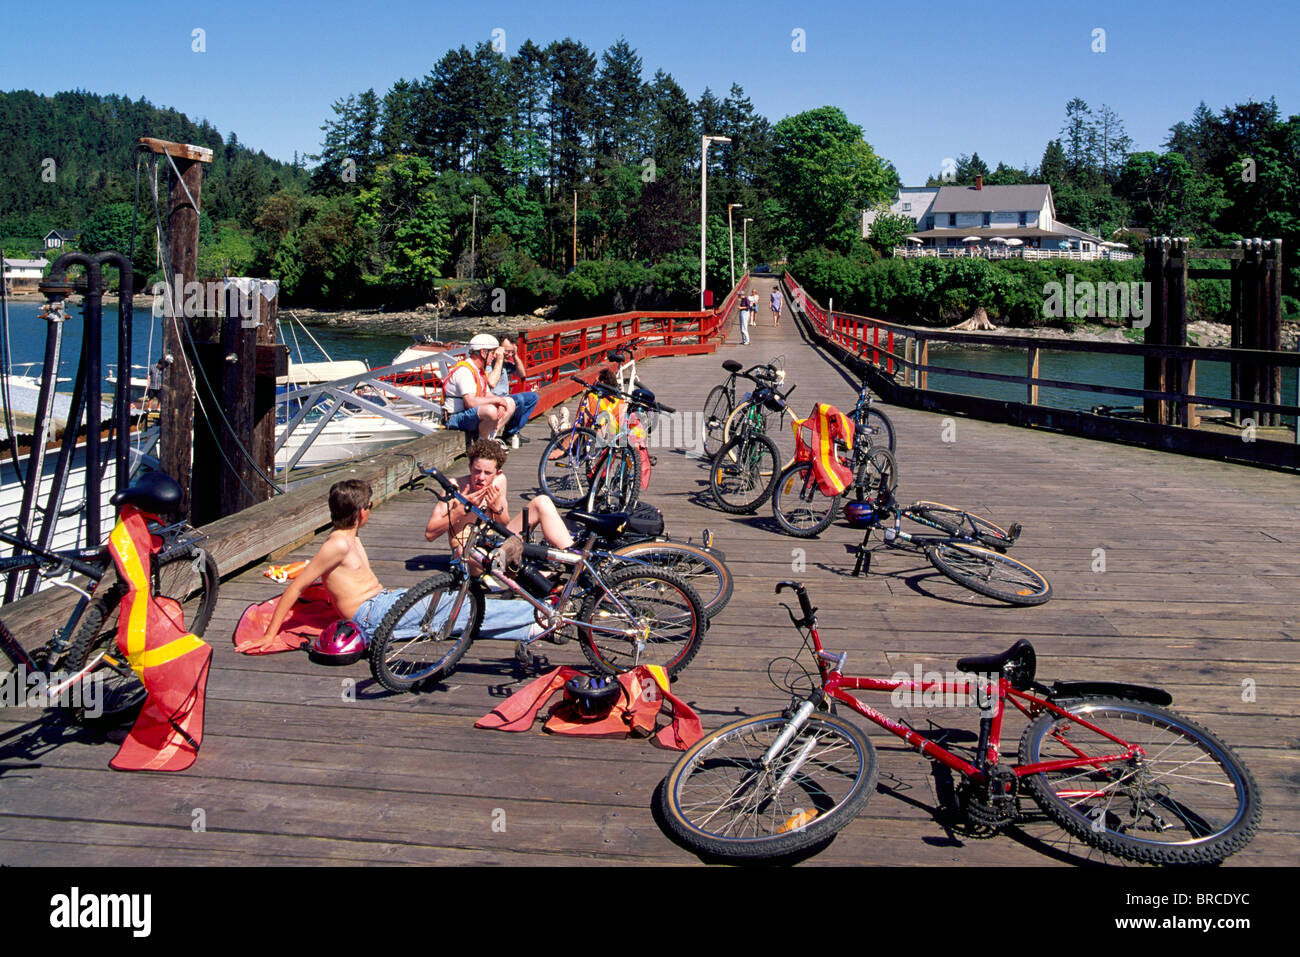 Mayne Island, südlichen Gulf Islands, BC, British Columbia, Kanada - Radfahrer ruht auf Dock Bergleute Bay, Sommer Stockfoto